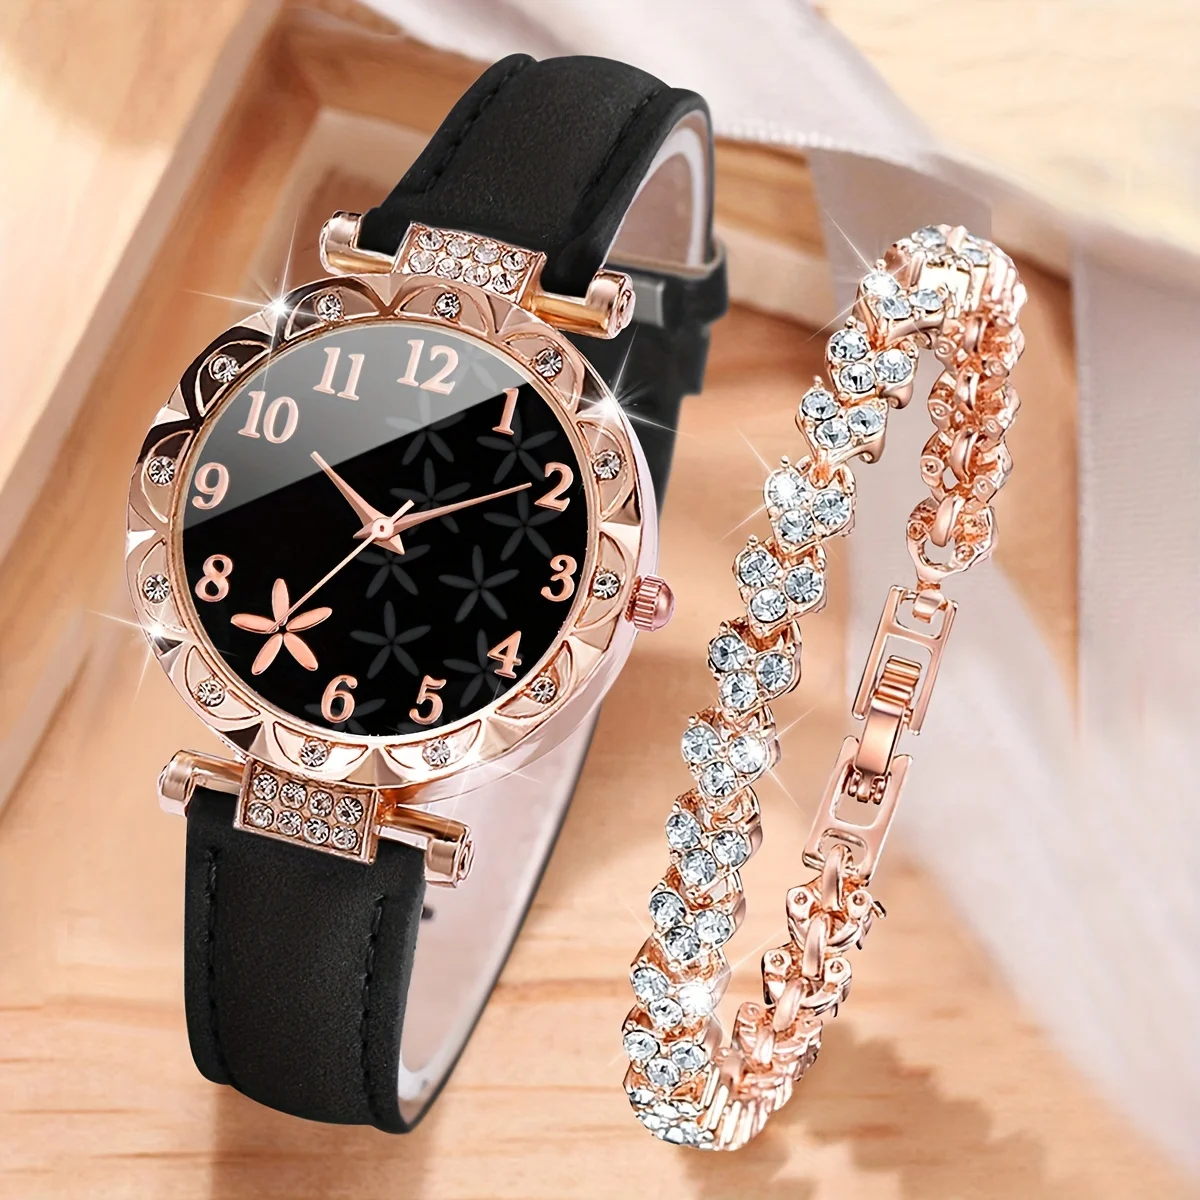 

2pcs/set Women's Flower Rhinestone Fashion Quartz Watch Analog PU Leather Wrist Watch & Bracelet, Gift For Mom Her